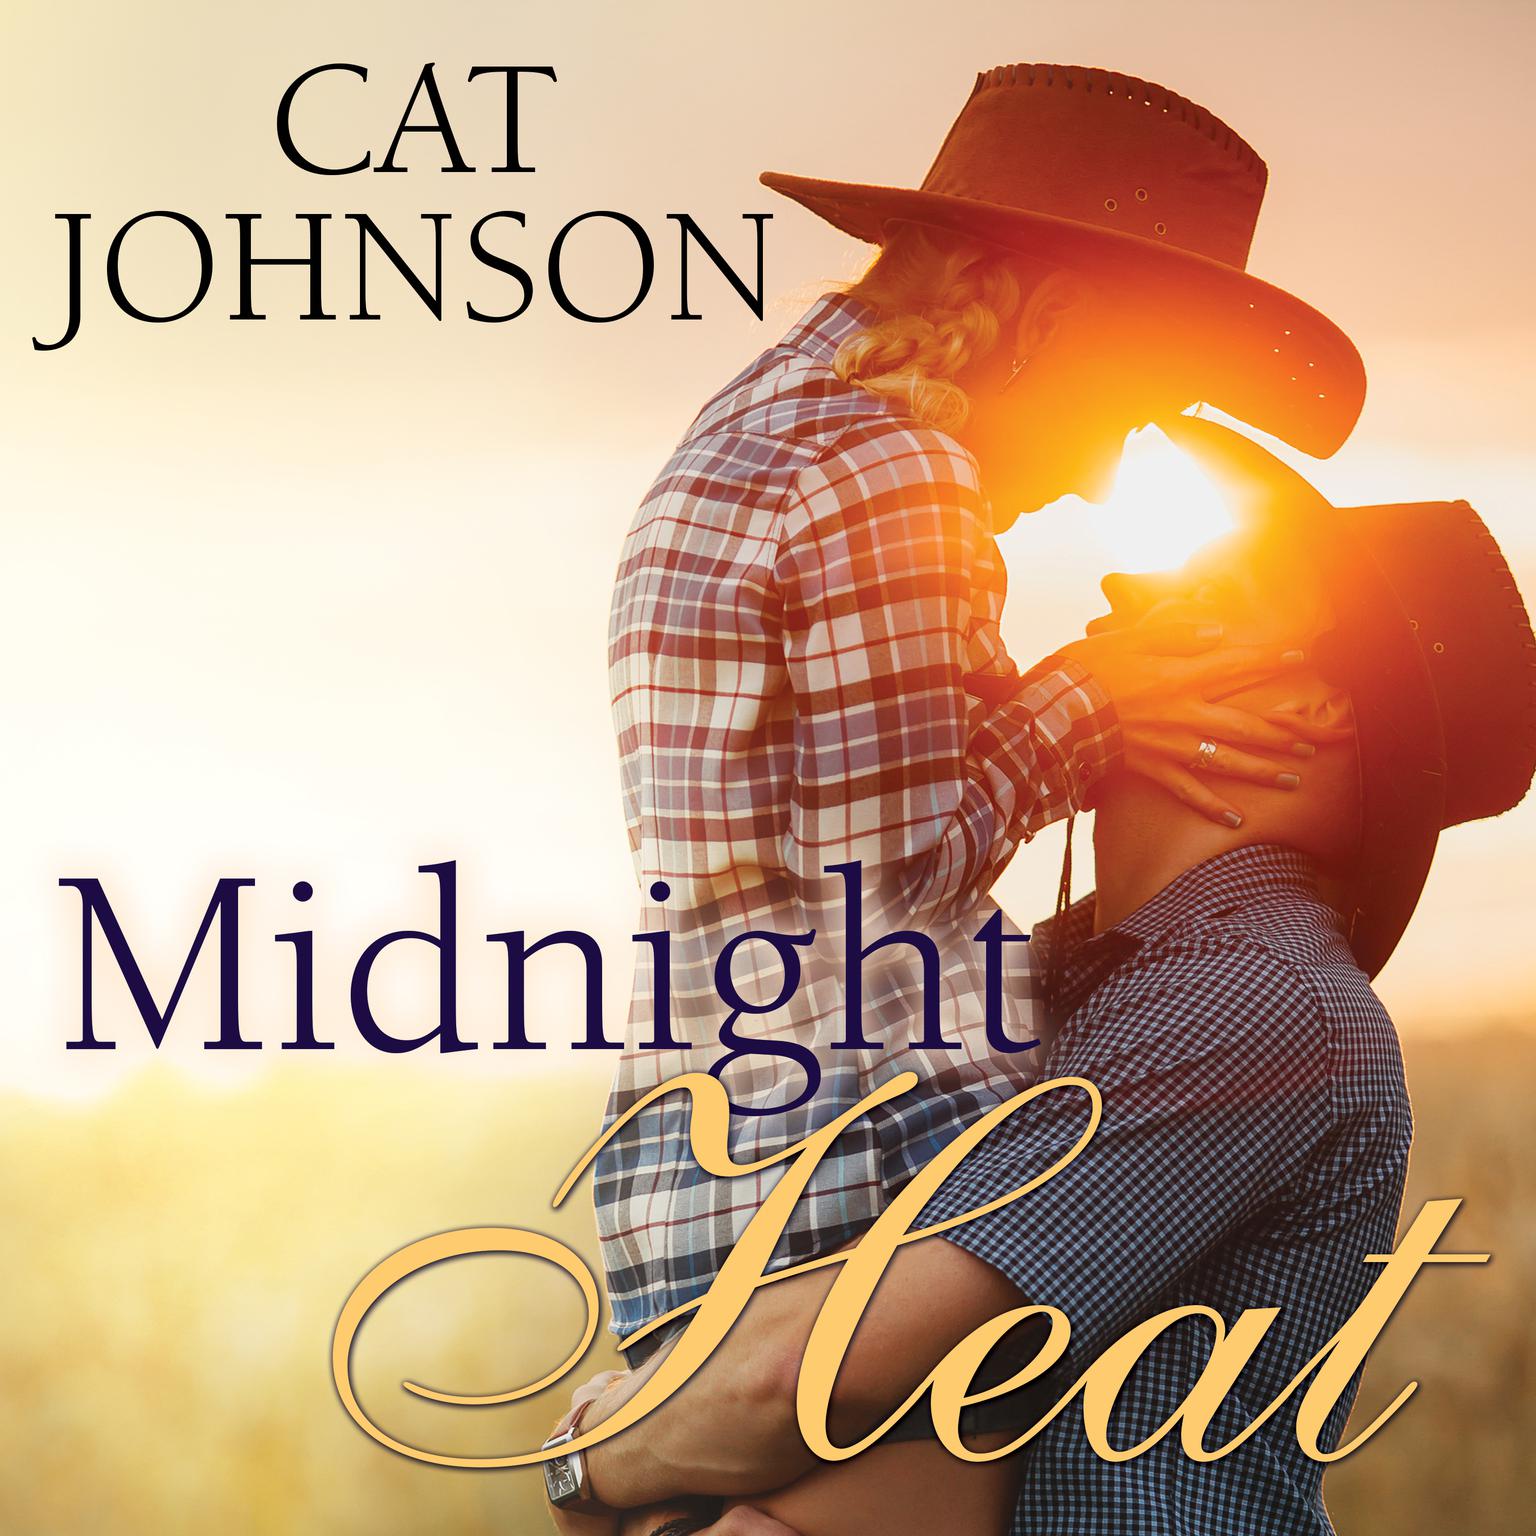 Midnight Heat Audiobook, by Cat Johnson